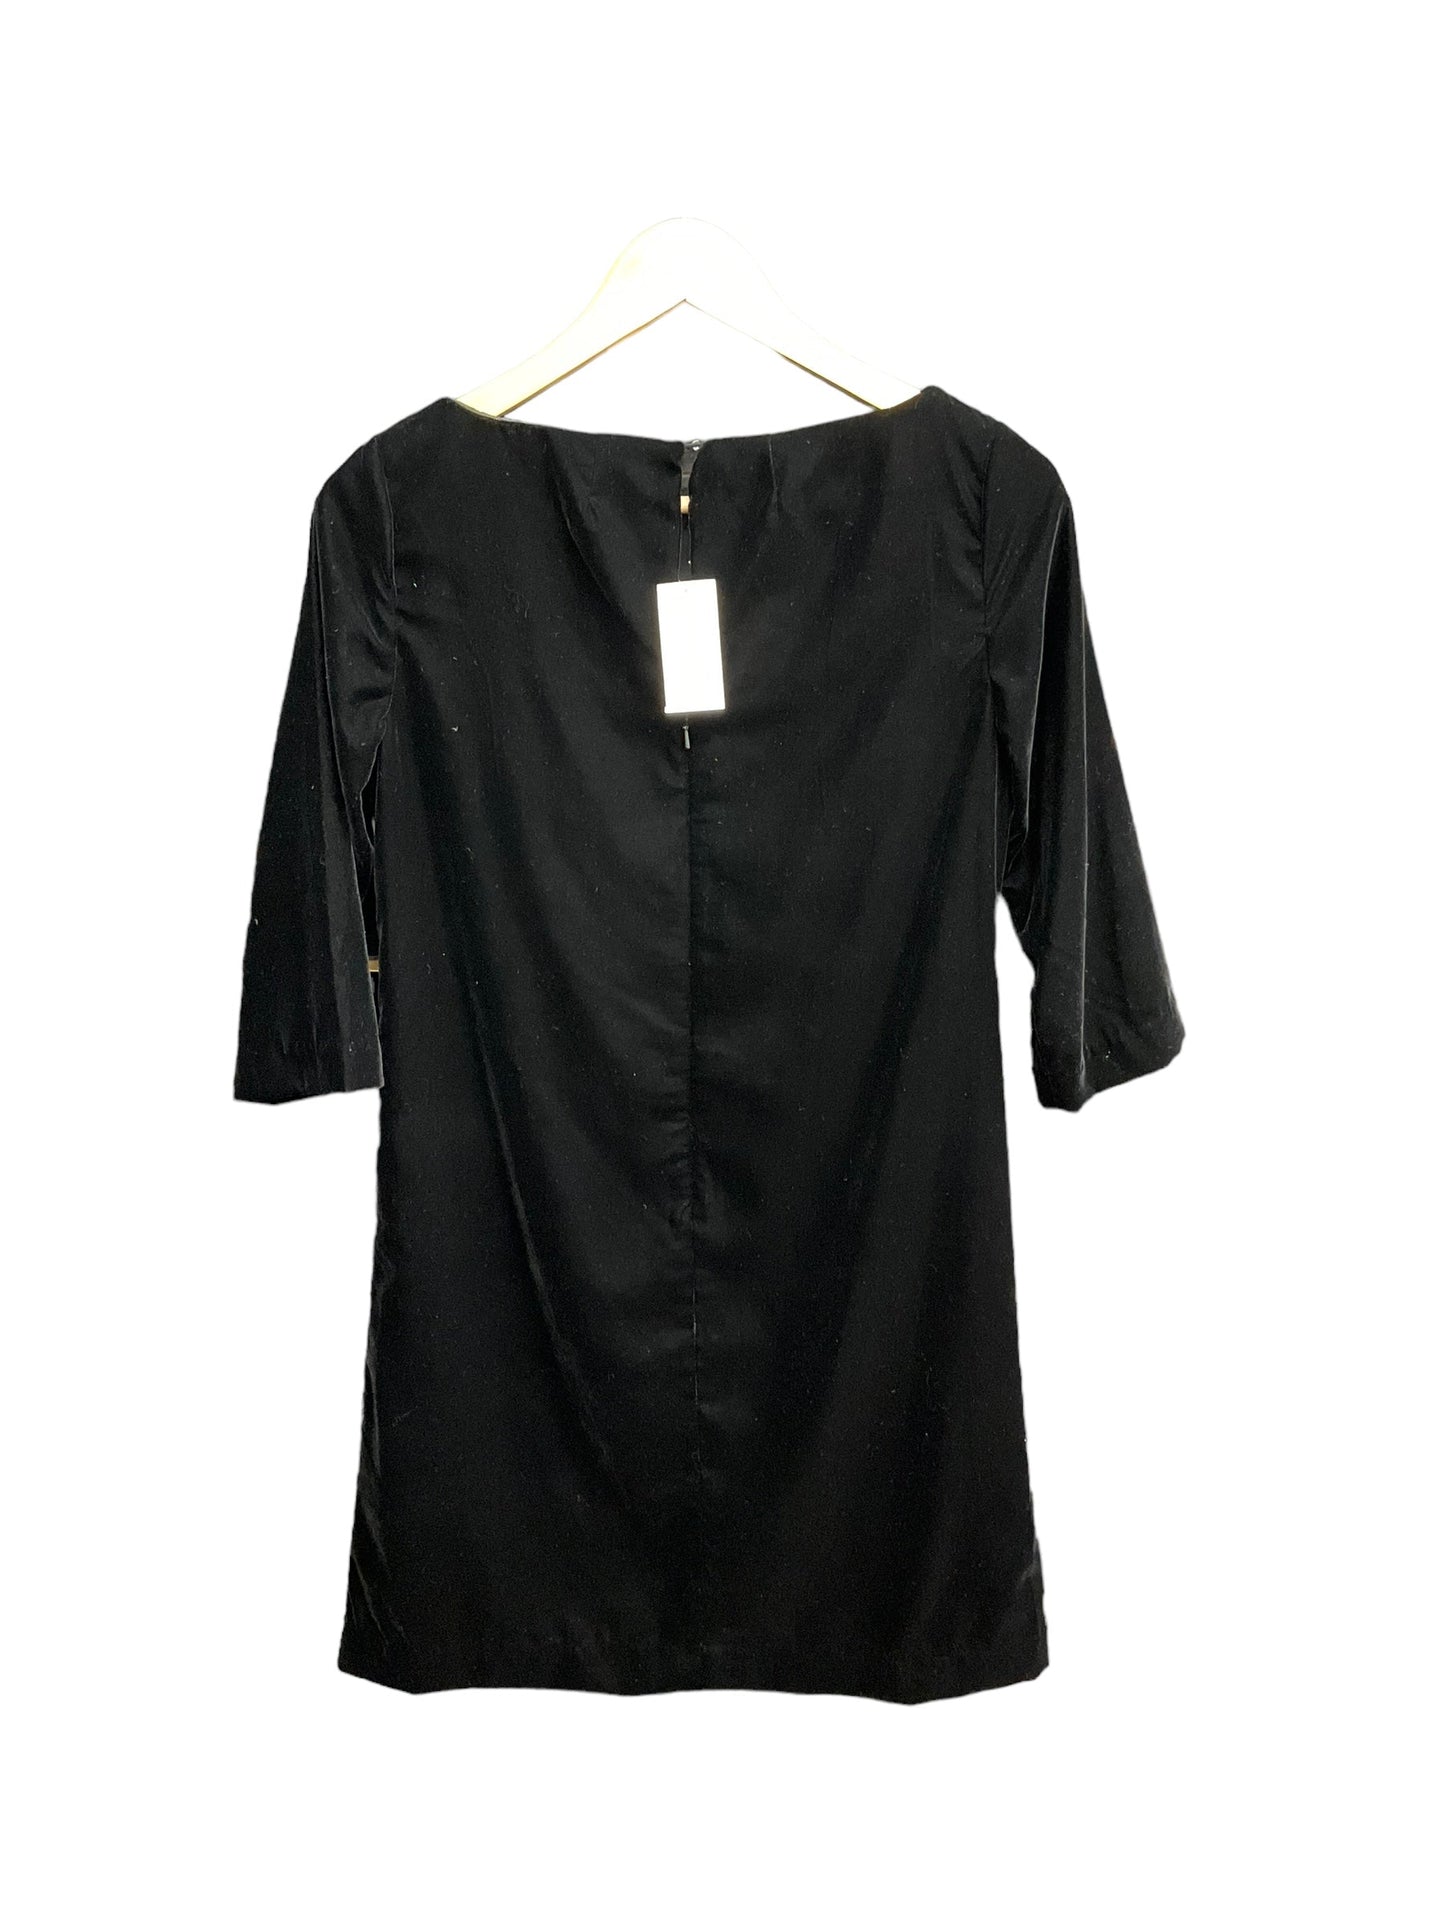 Black Dress Casual Short Banana Republic, Size S